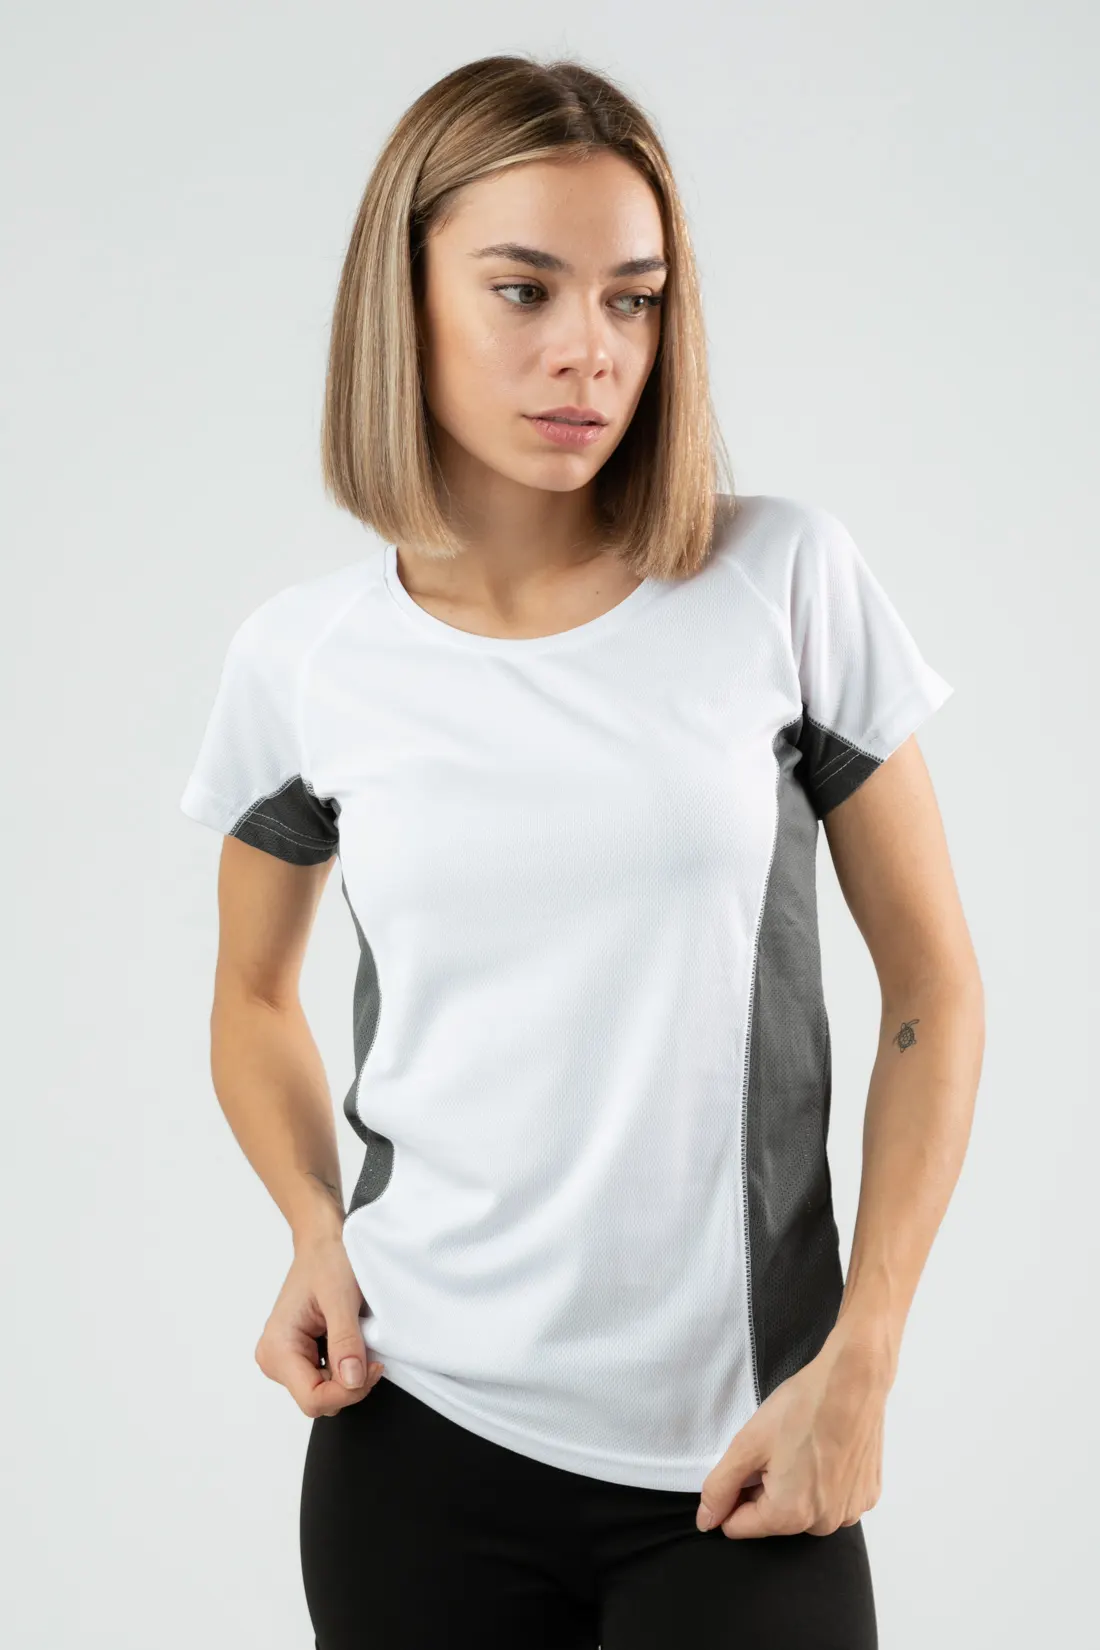 Camiseta Sanga - Branco/Cinza Oscuro